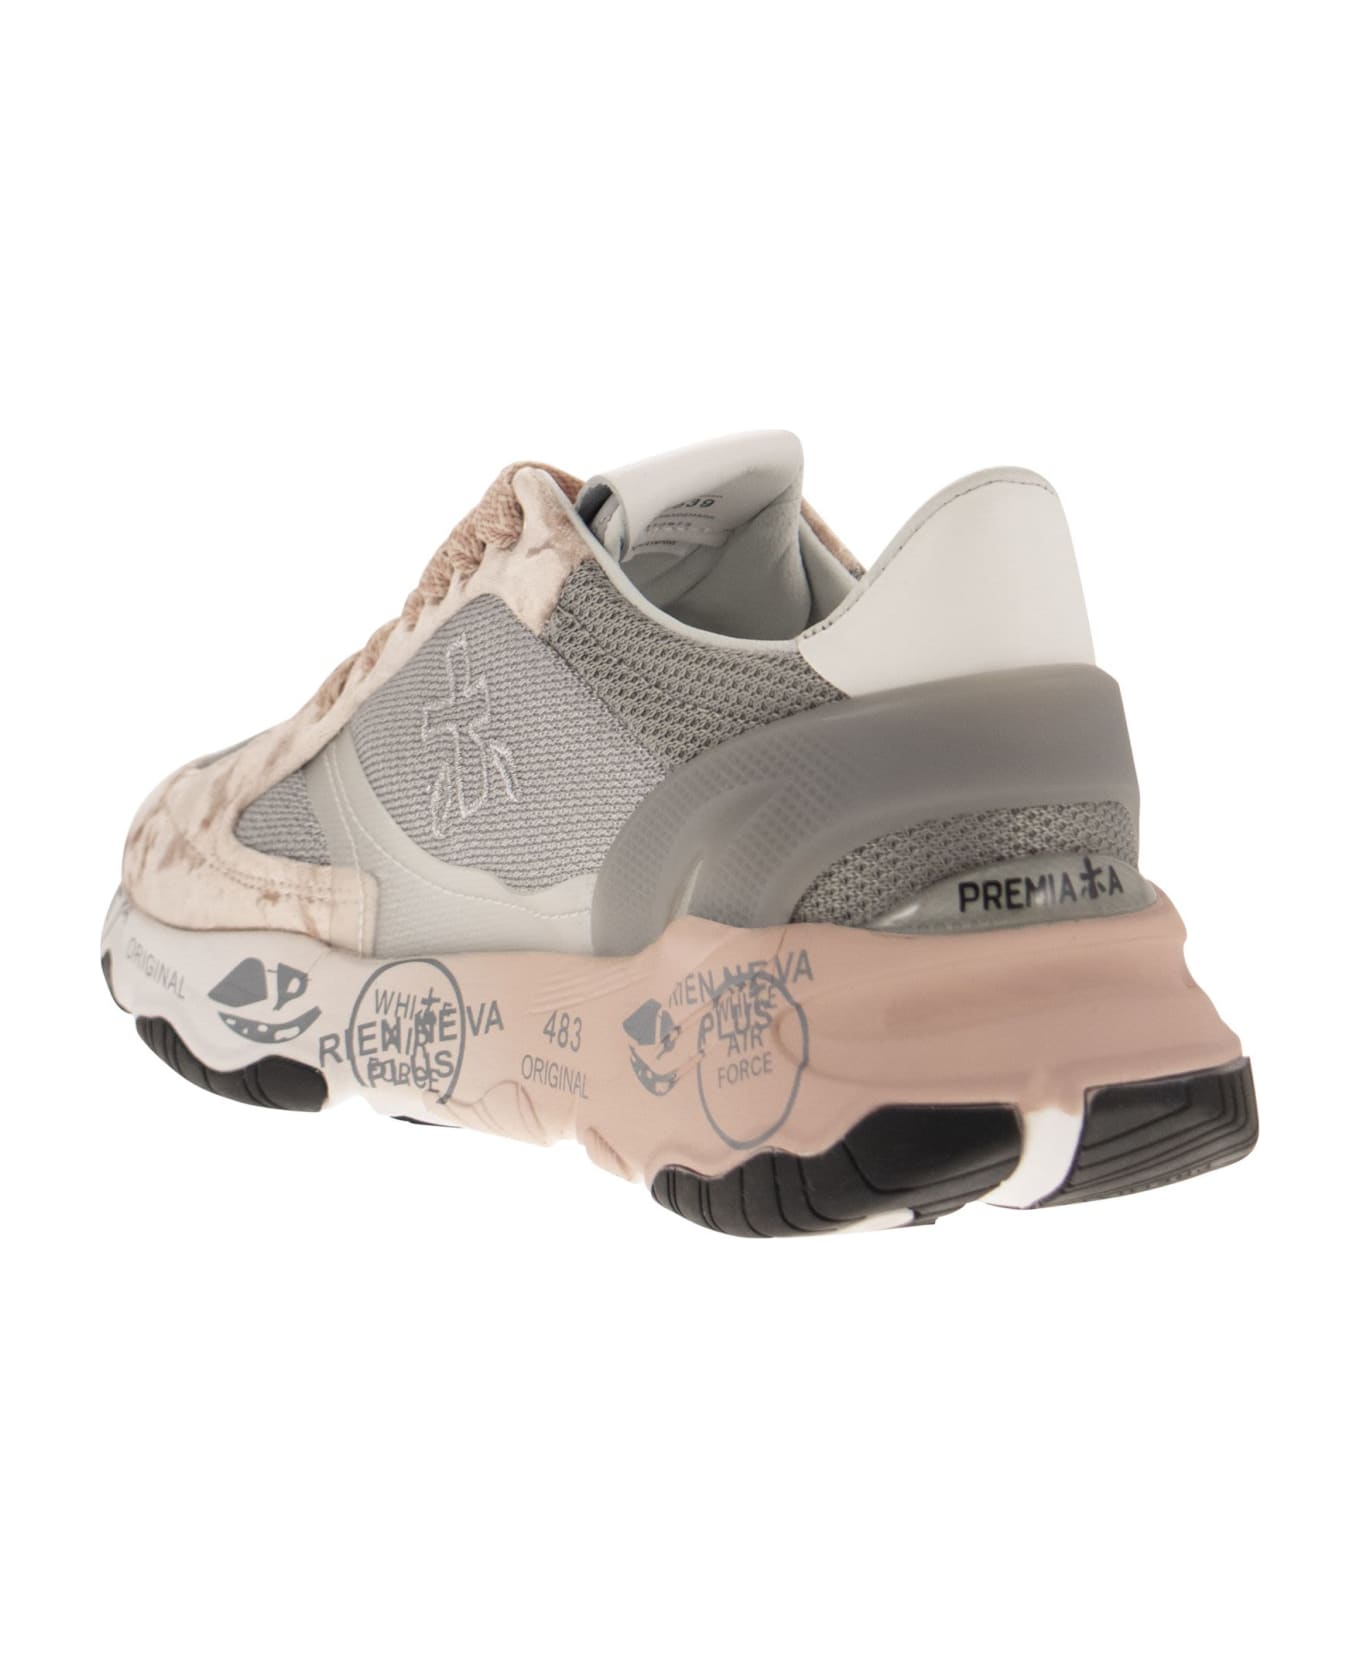 Premiata Buffly Sneakers - Pink/grey スニーカー